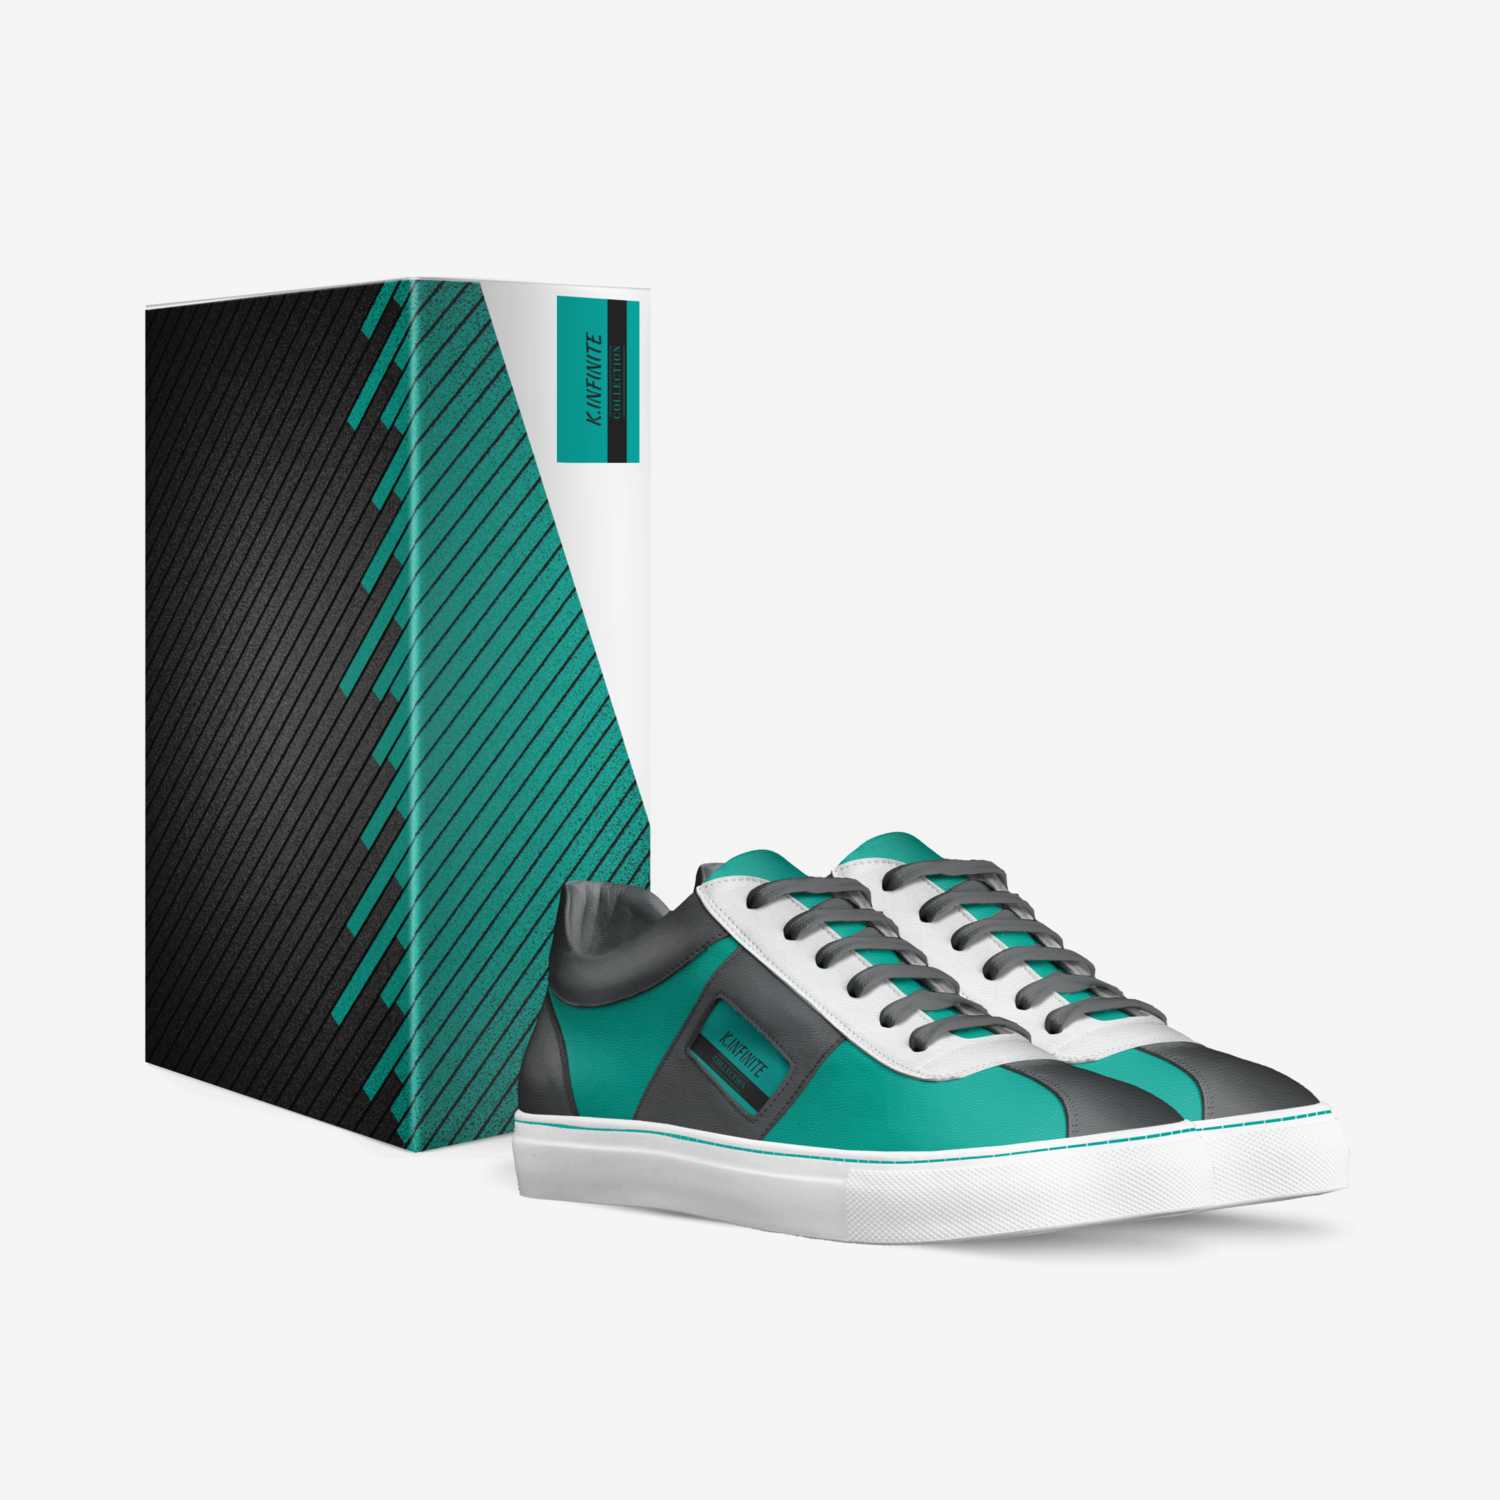 K.INFINITE custom made in Italy shoes by K Beatz | Box view